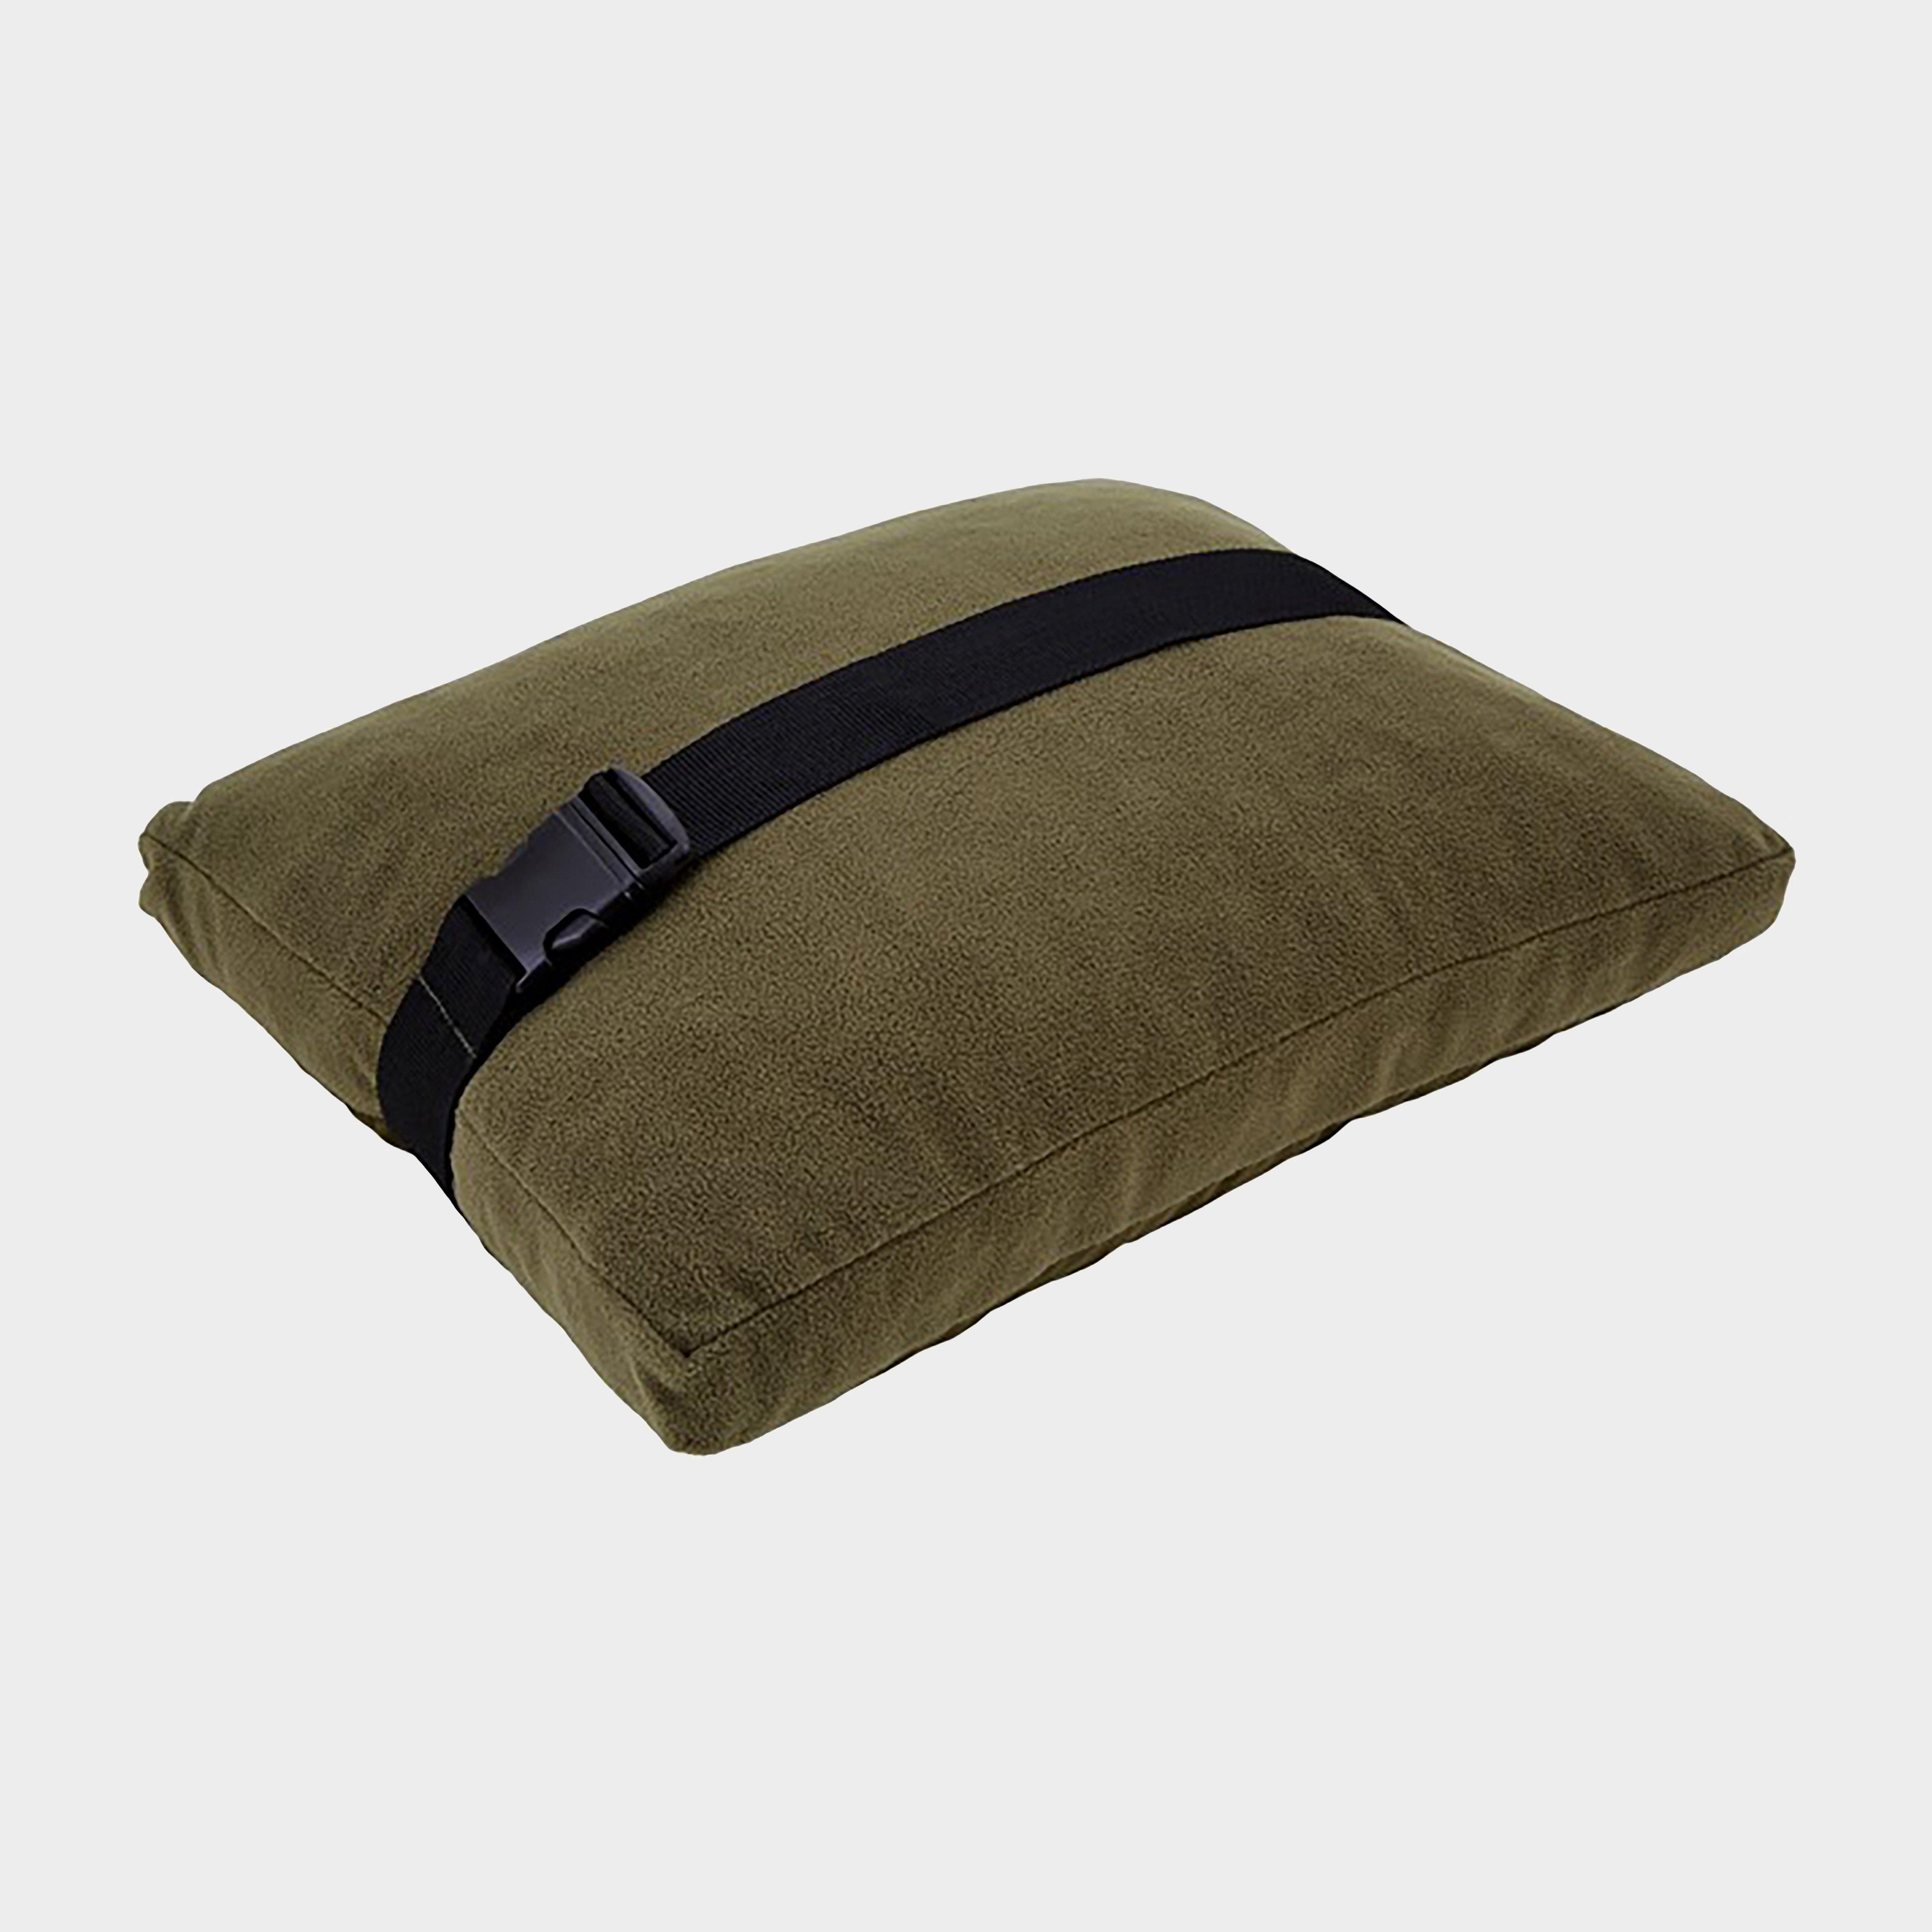 Westlake Double Sided Pillow Large - Khaki/med  Khaki/med